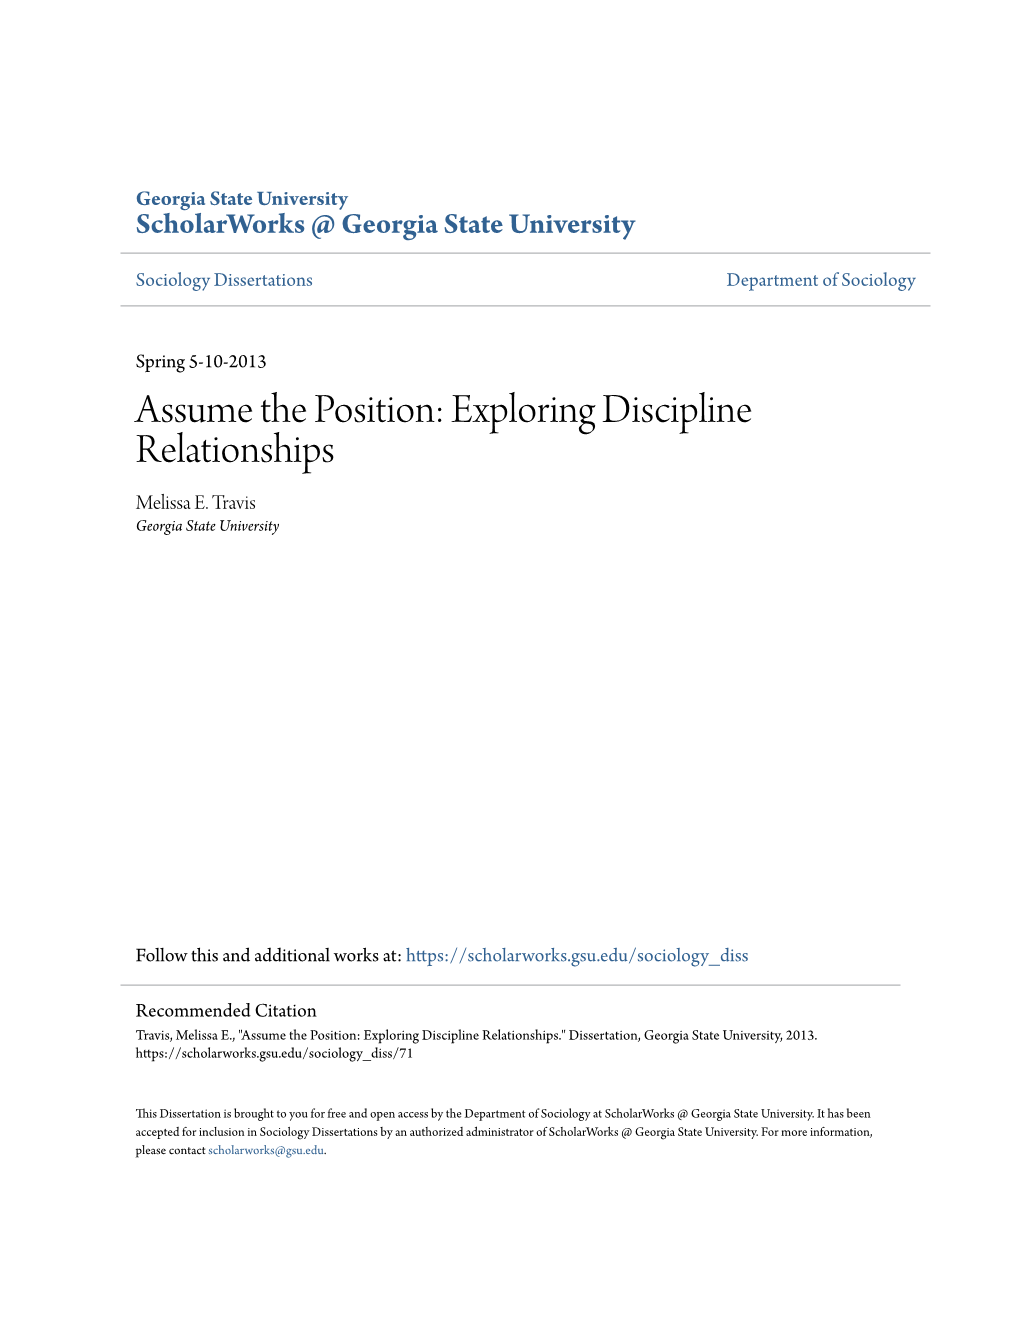 Assume the Position: Exploring Discipline Relationships Melissa E